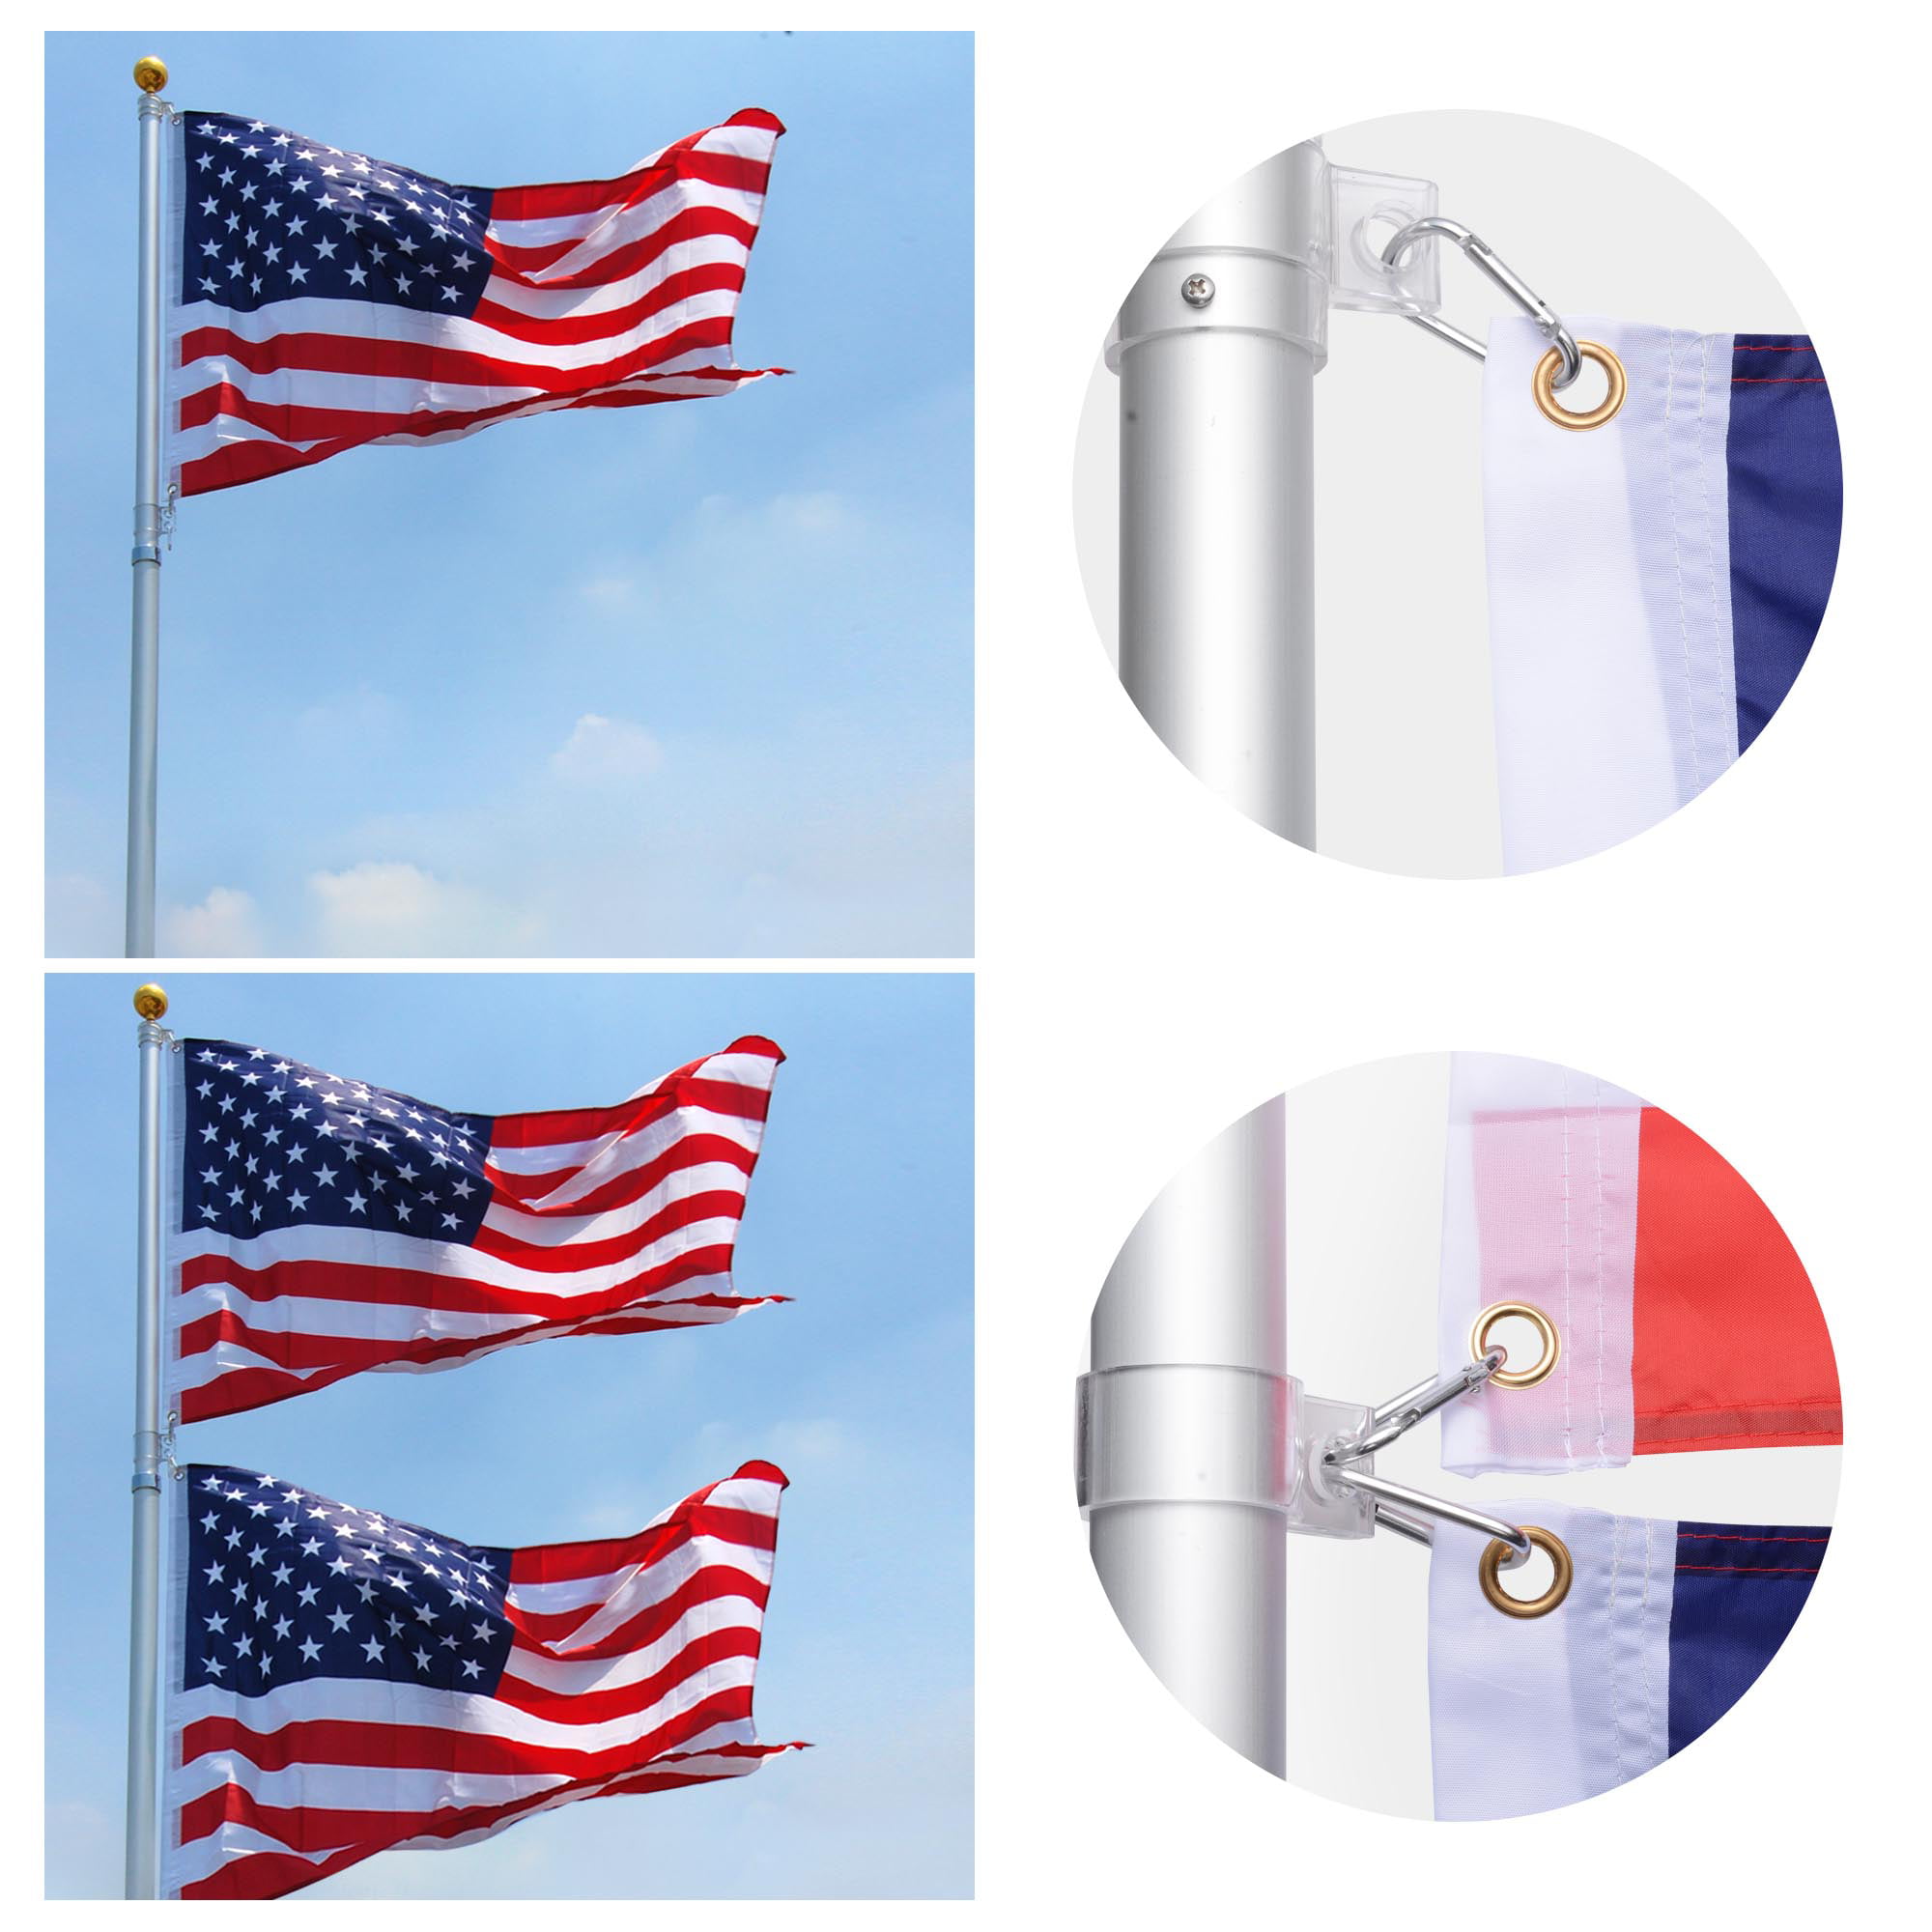 3x5 USA American & State of Florida Flag Aluminum Pole Kit Ball Top 3'x5' 